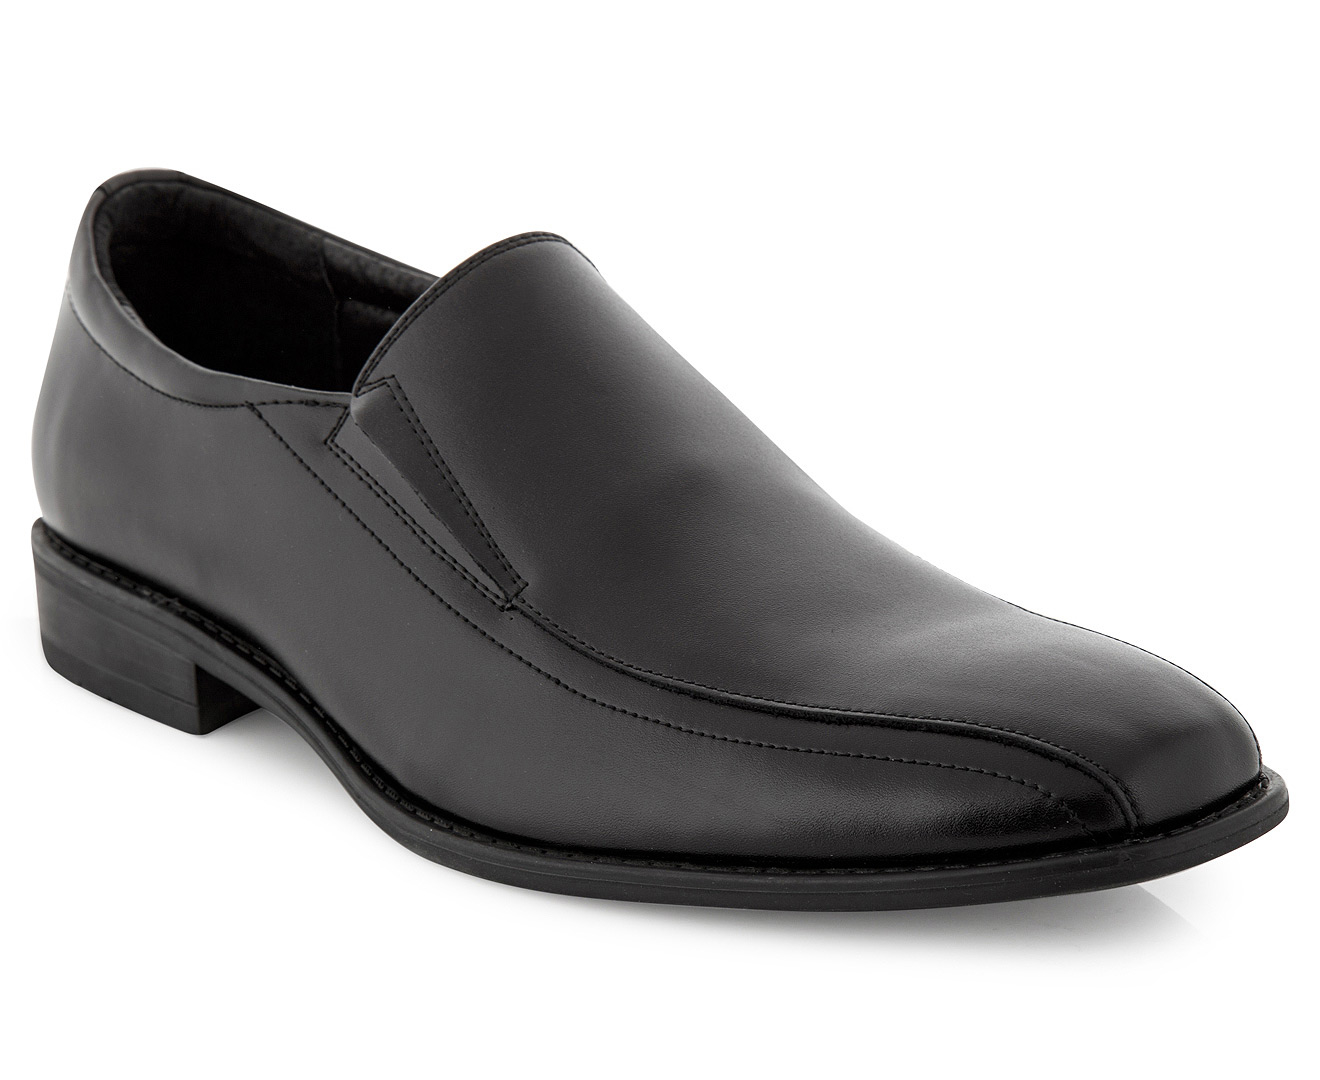 Julius Marlow Men's Swell Shoe - Black